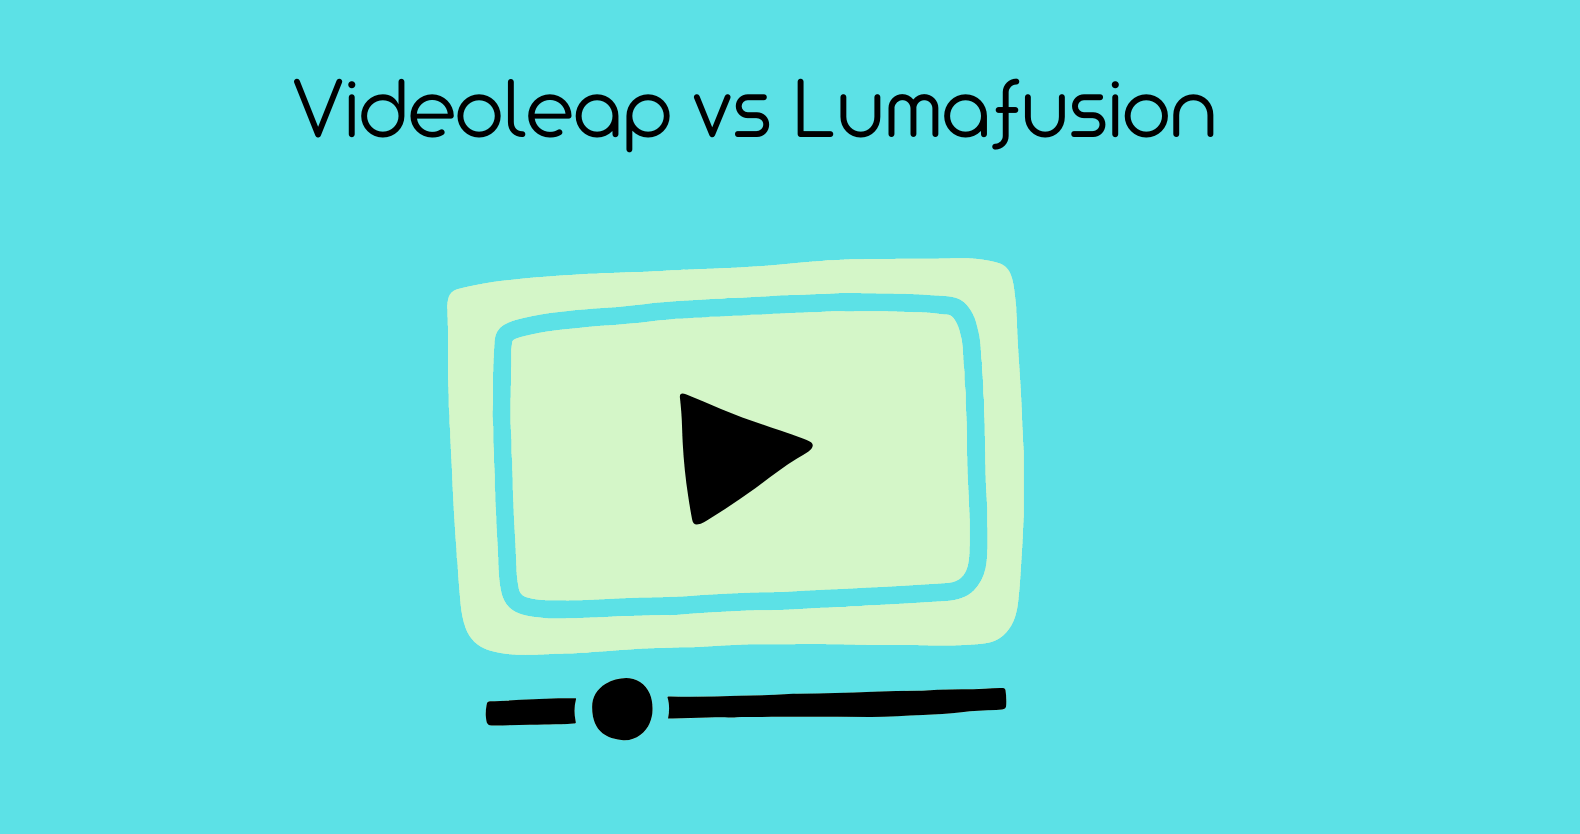 Videoleap vs Lumafusion